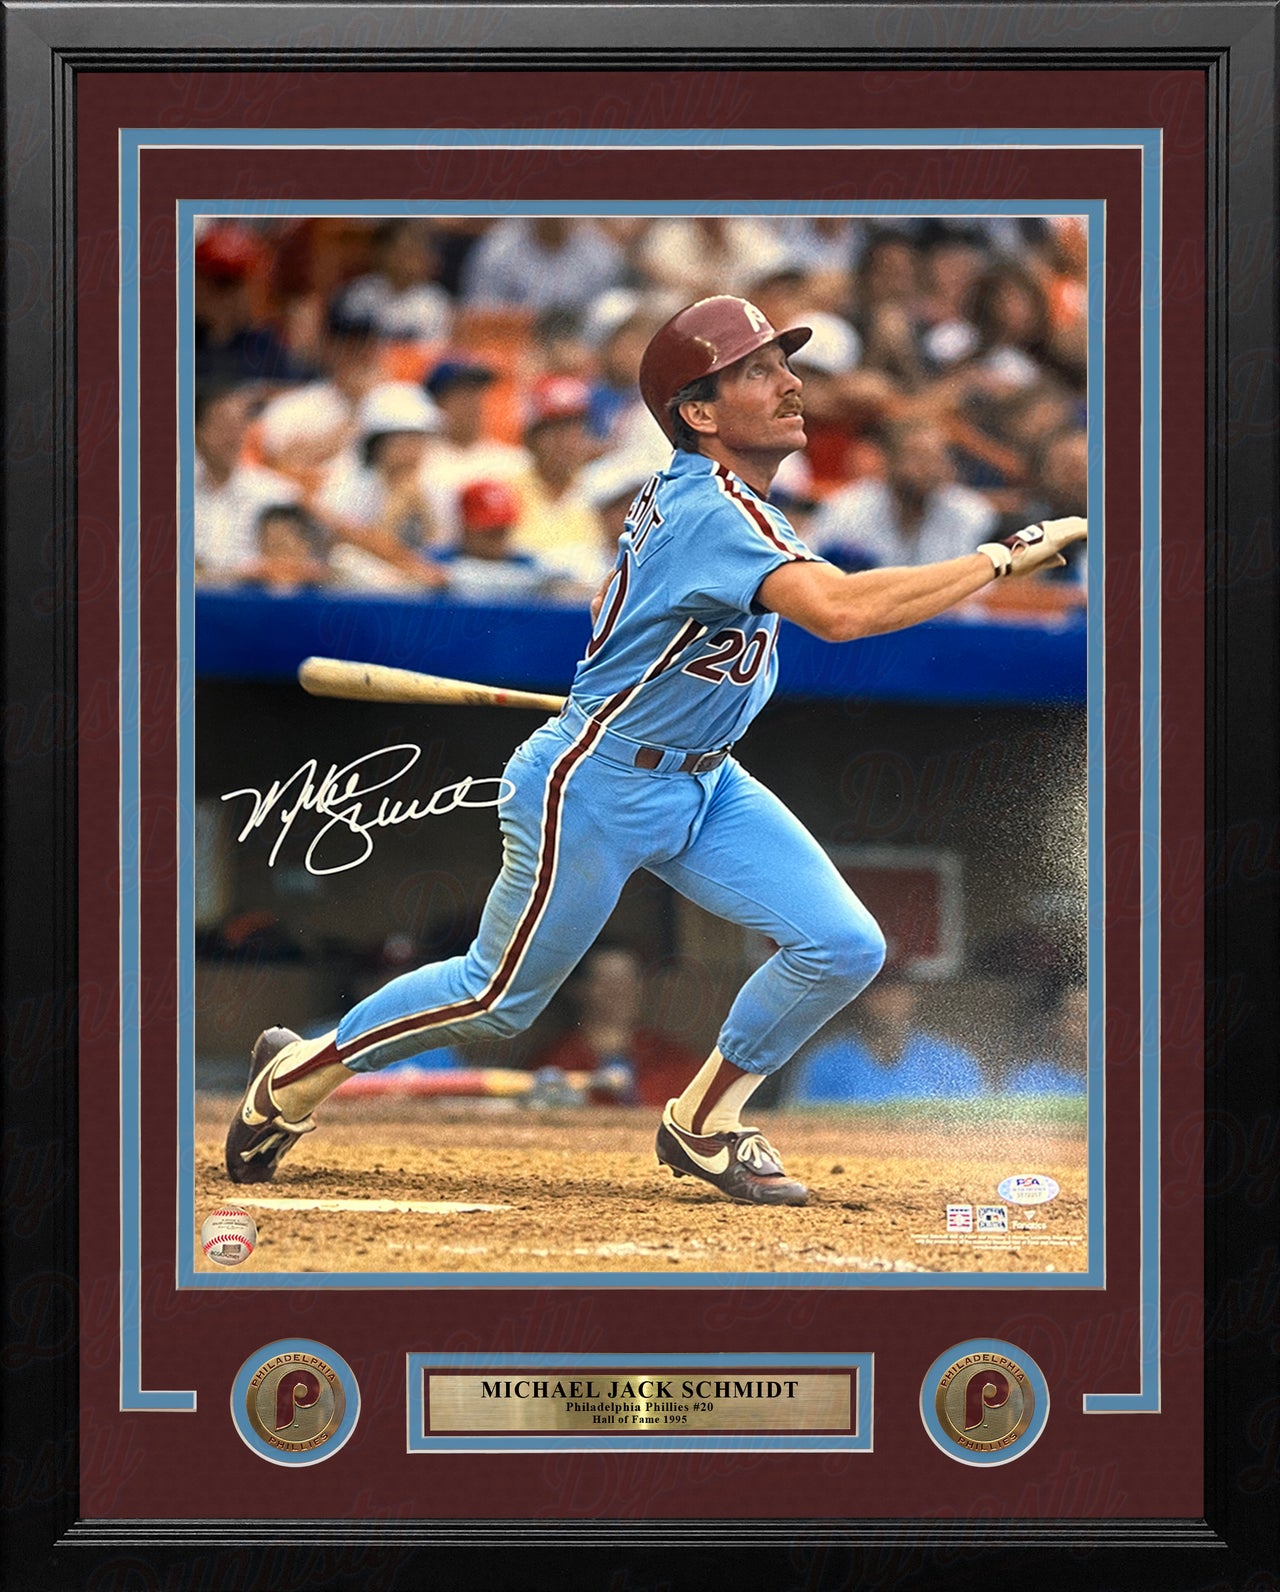 Framed Autographed/Signed Mike Schmidt 33x42 Philadelphia Retro Blue  Baseball Jersey JSA COA